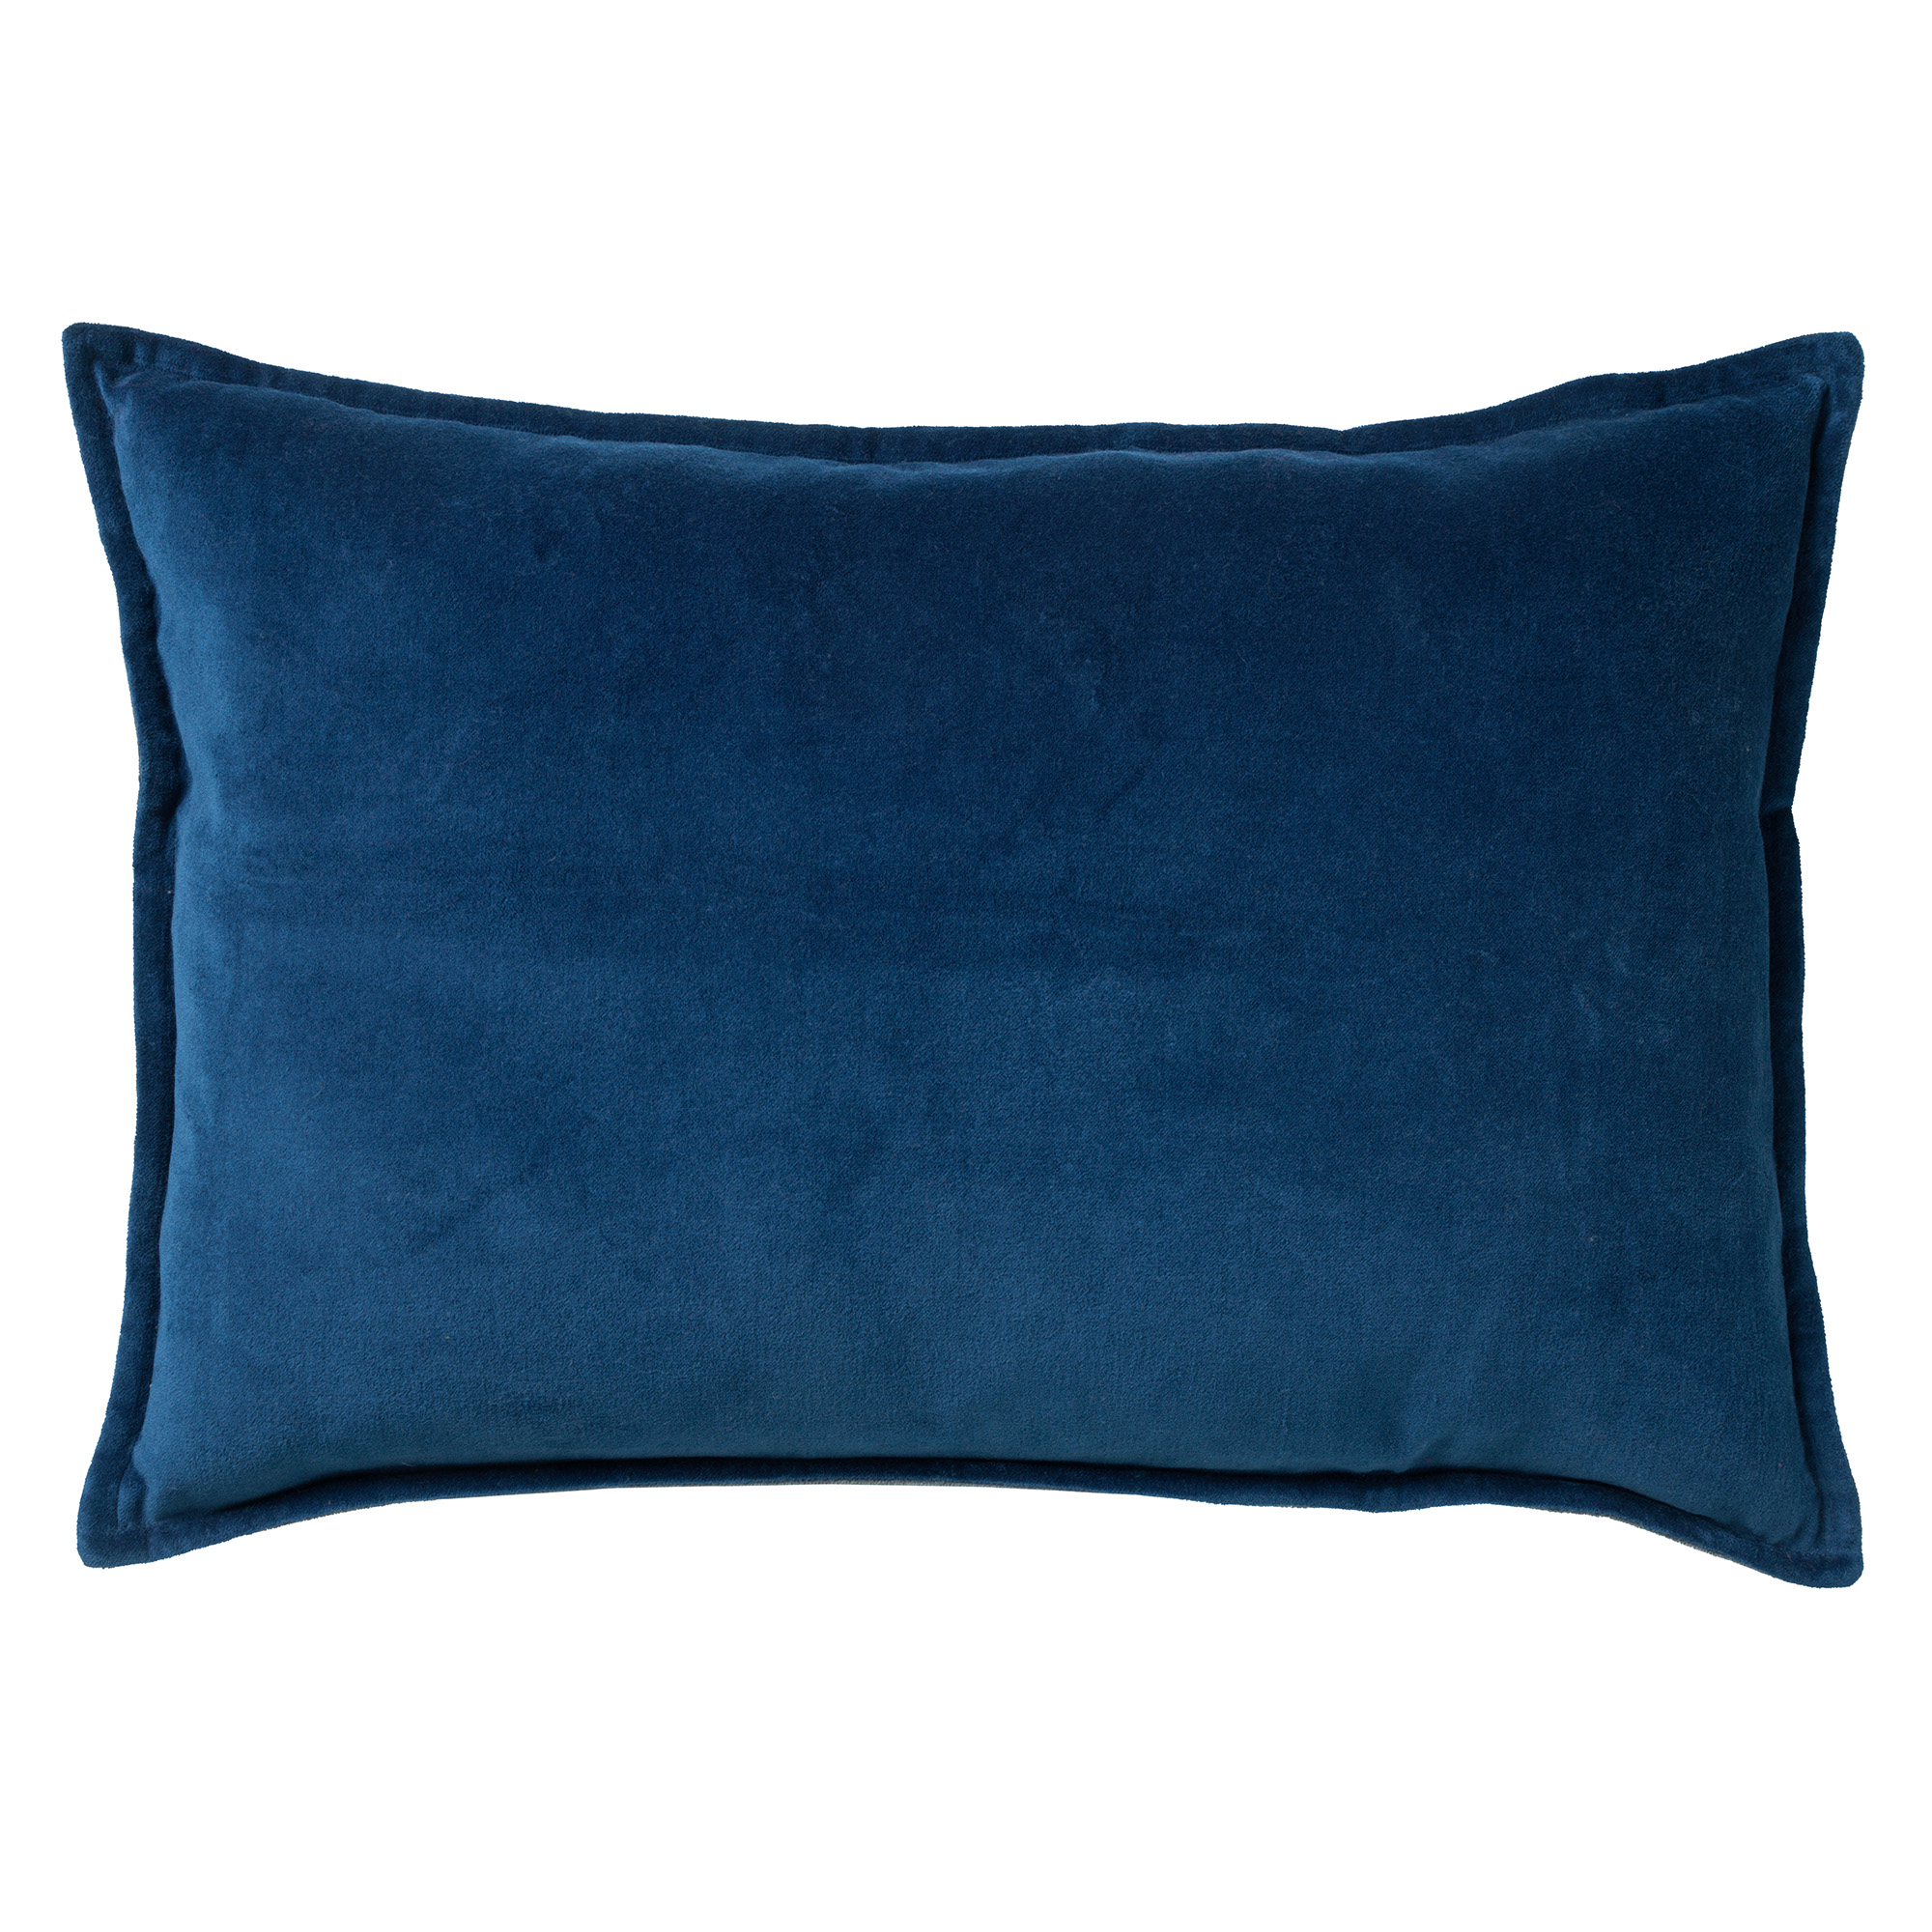 FAY - Insignia Blue 40x60 cm - | SIERKUSSEN | DDL02203000277